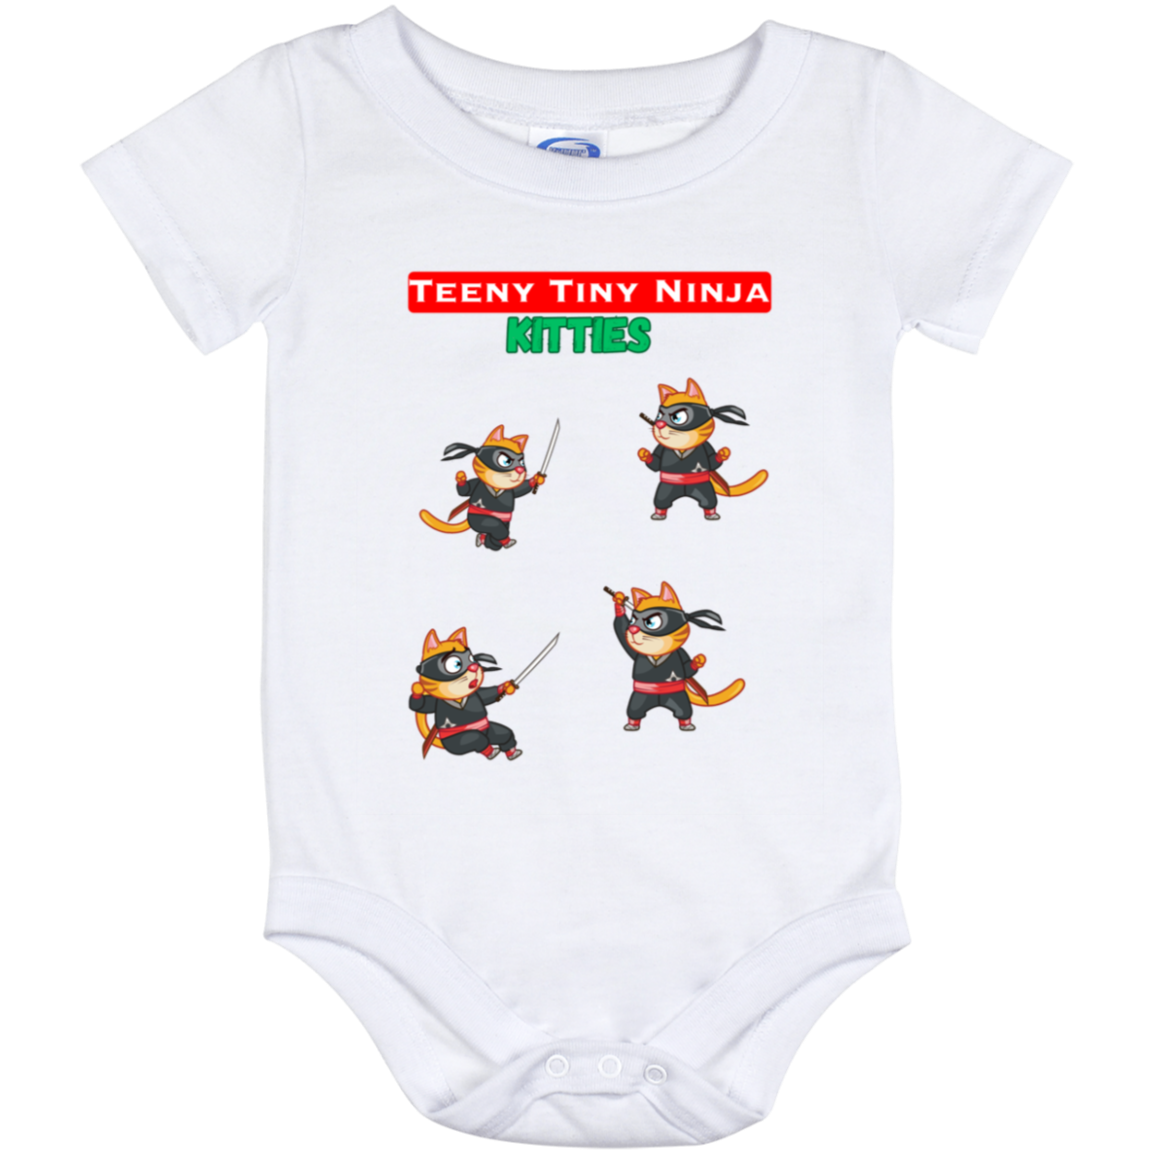 Teeny Tiny Ninja Kitties - Unisex Baby Onesie's 6, 12, & 24 Month